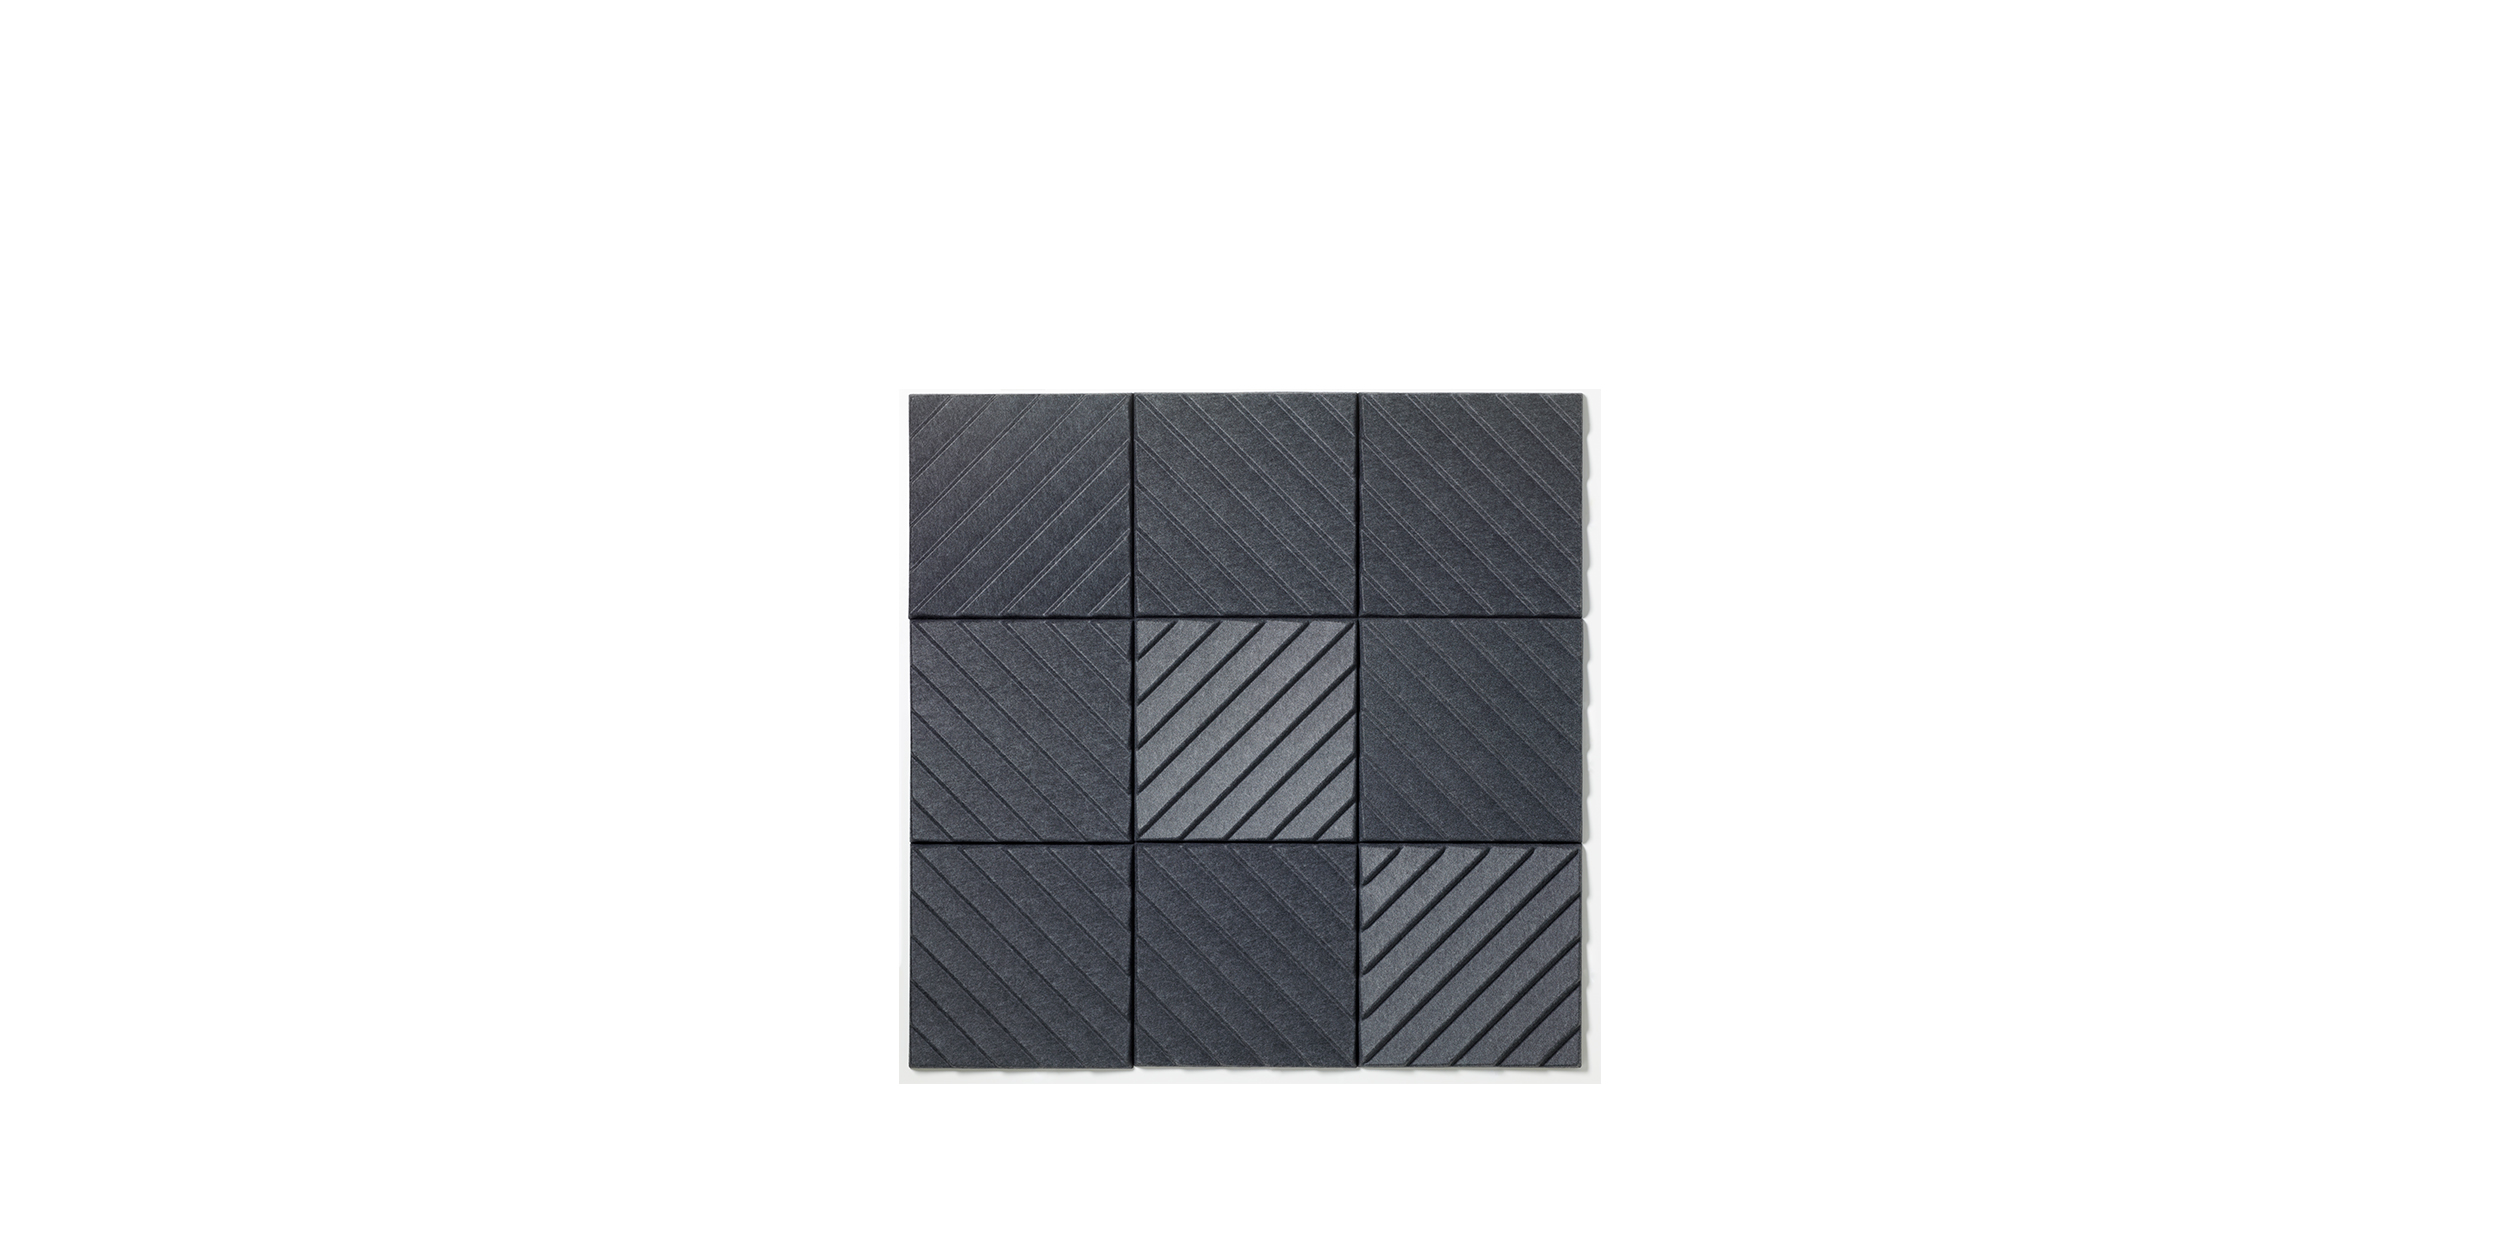 Soundwave® Stripes, Acoustic panel by Richard Hutten